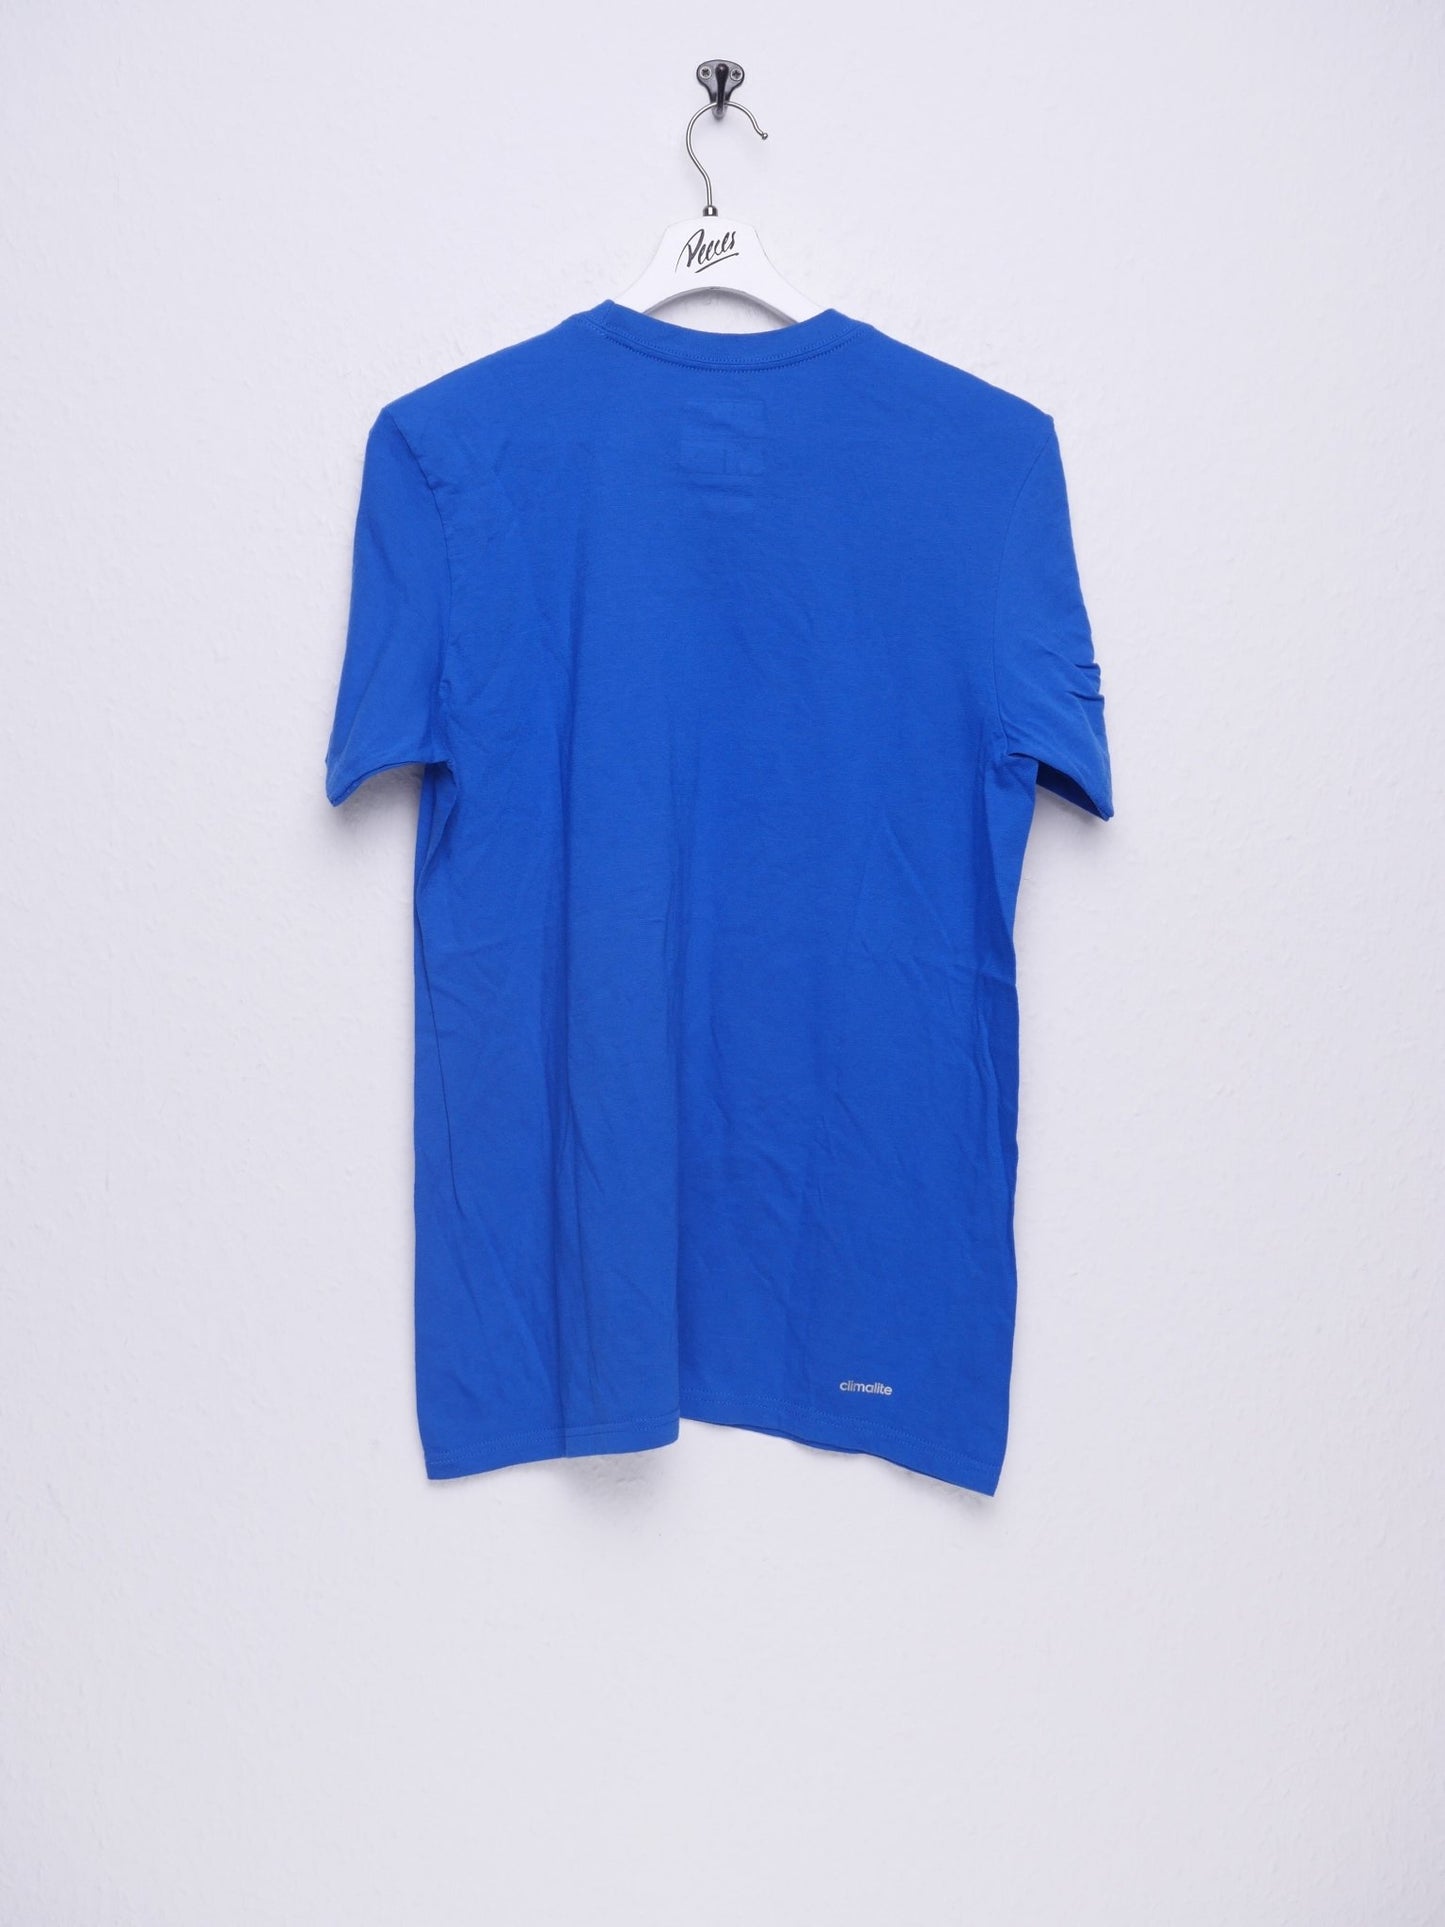 Adidas printed Logo blue Shirt - Peeces